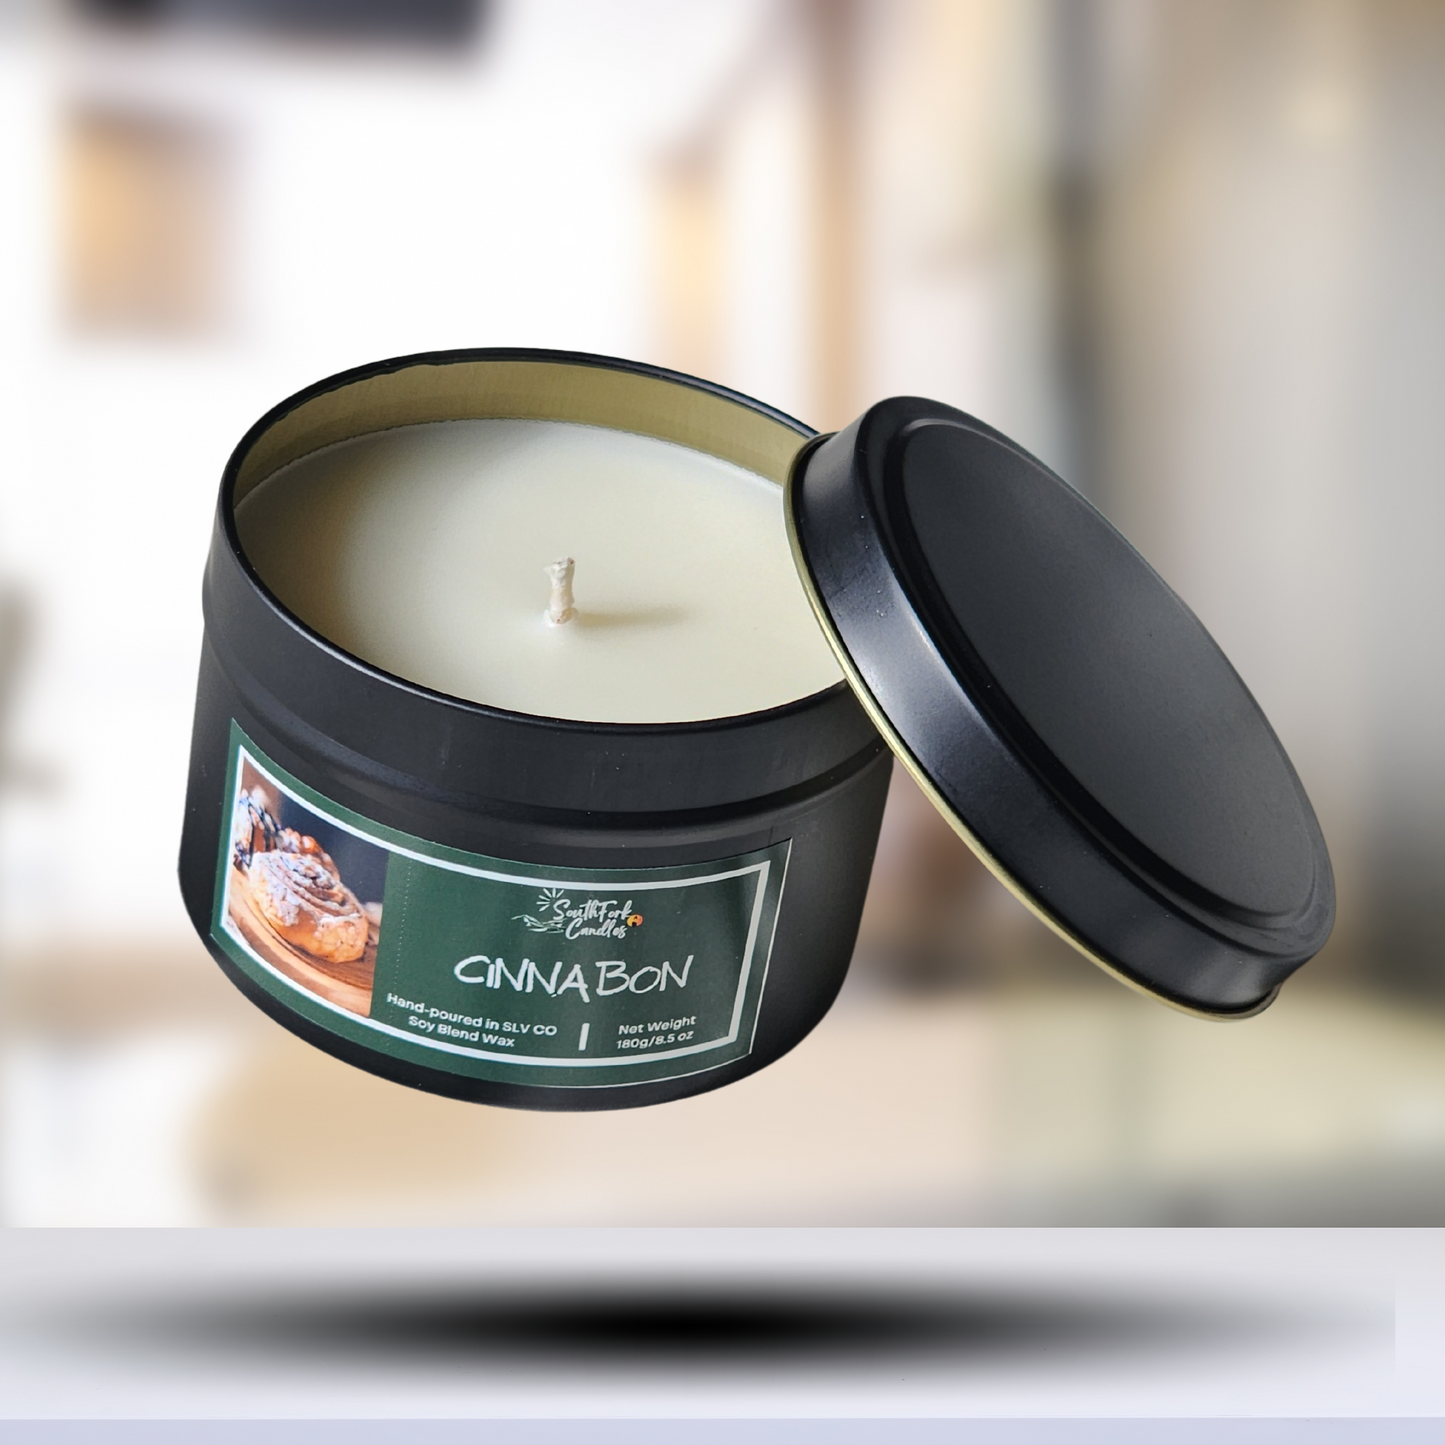 Cinnabon Scented Candle - 8.5oz tin